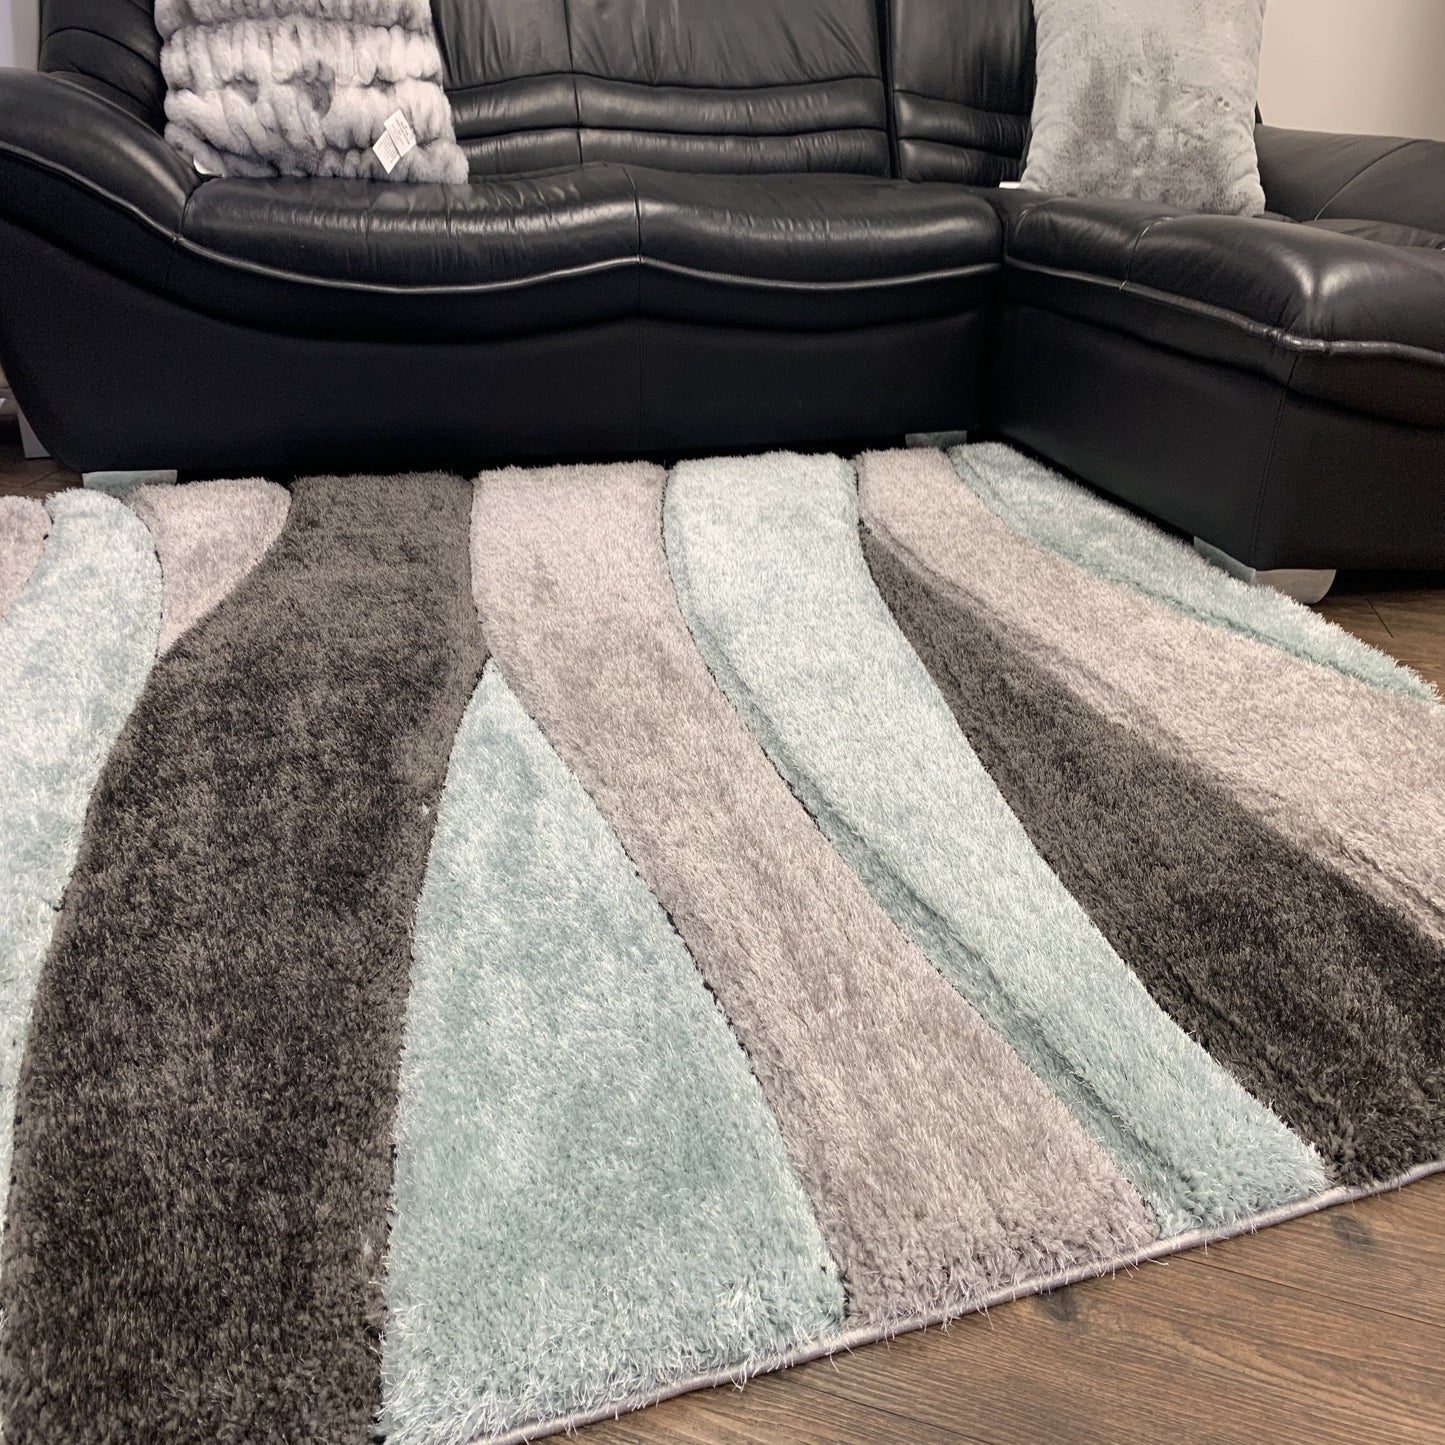 Plush Fluffy Shine 3D Wave Aqua Gray Silver Shag Area Rug/Carpet